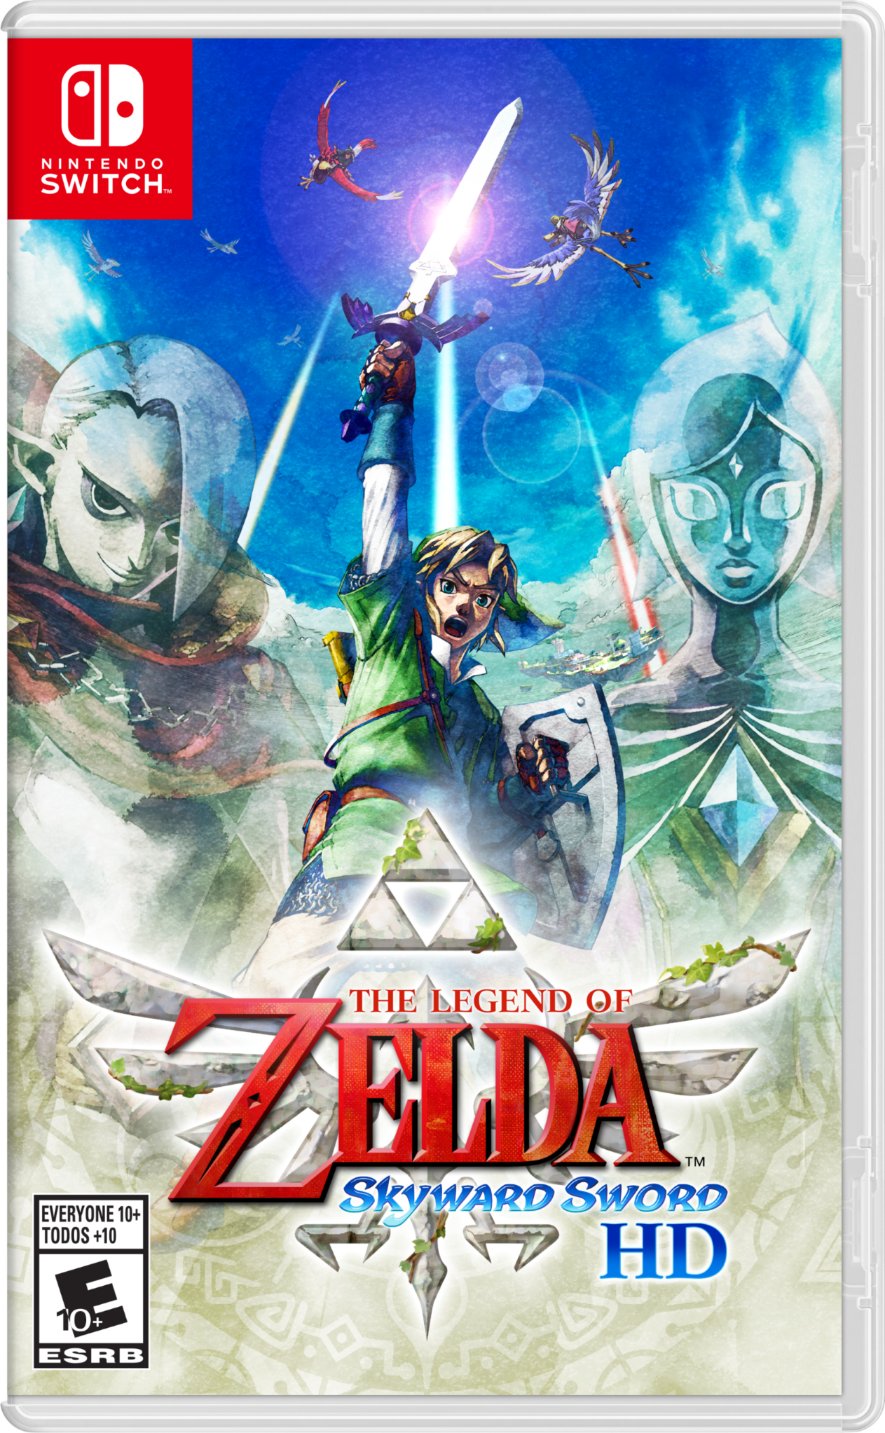 Nintendo revealed the Switch box art for Zelda Skyward Sword HD